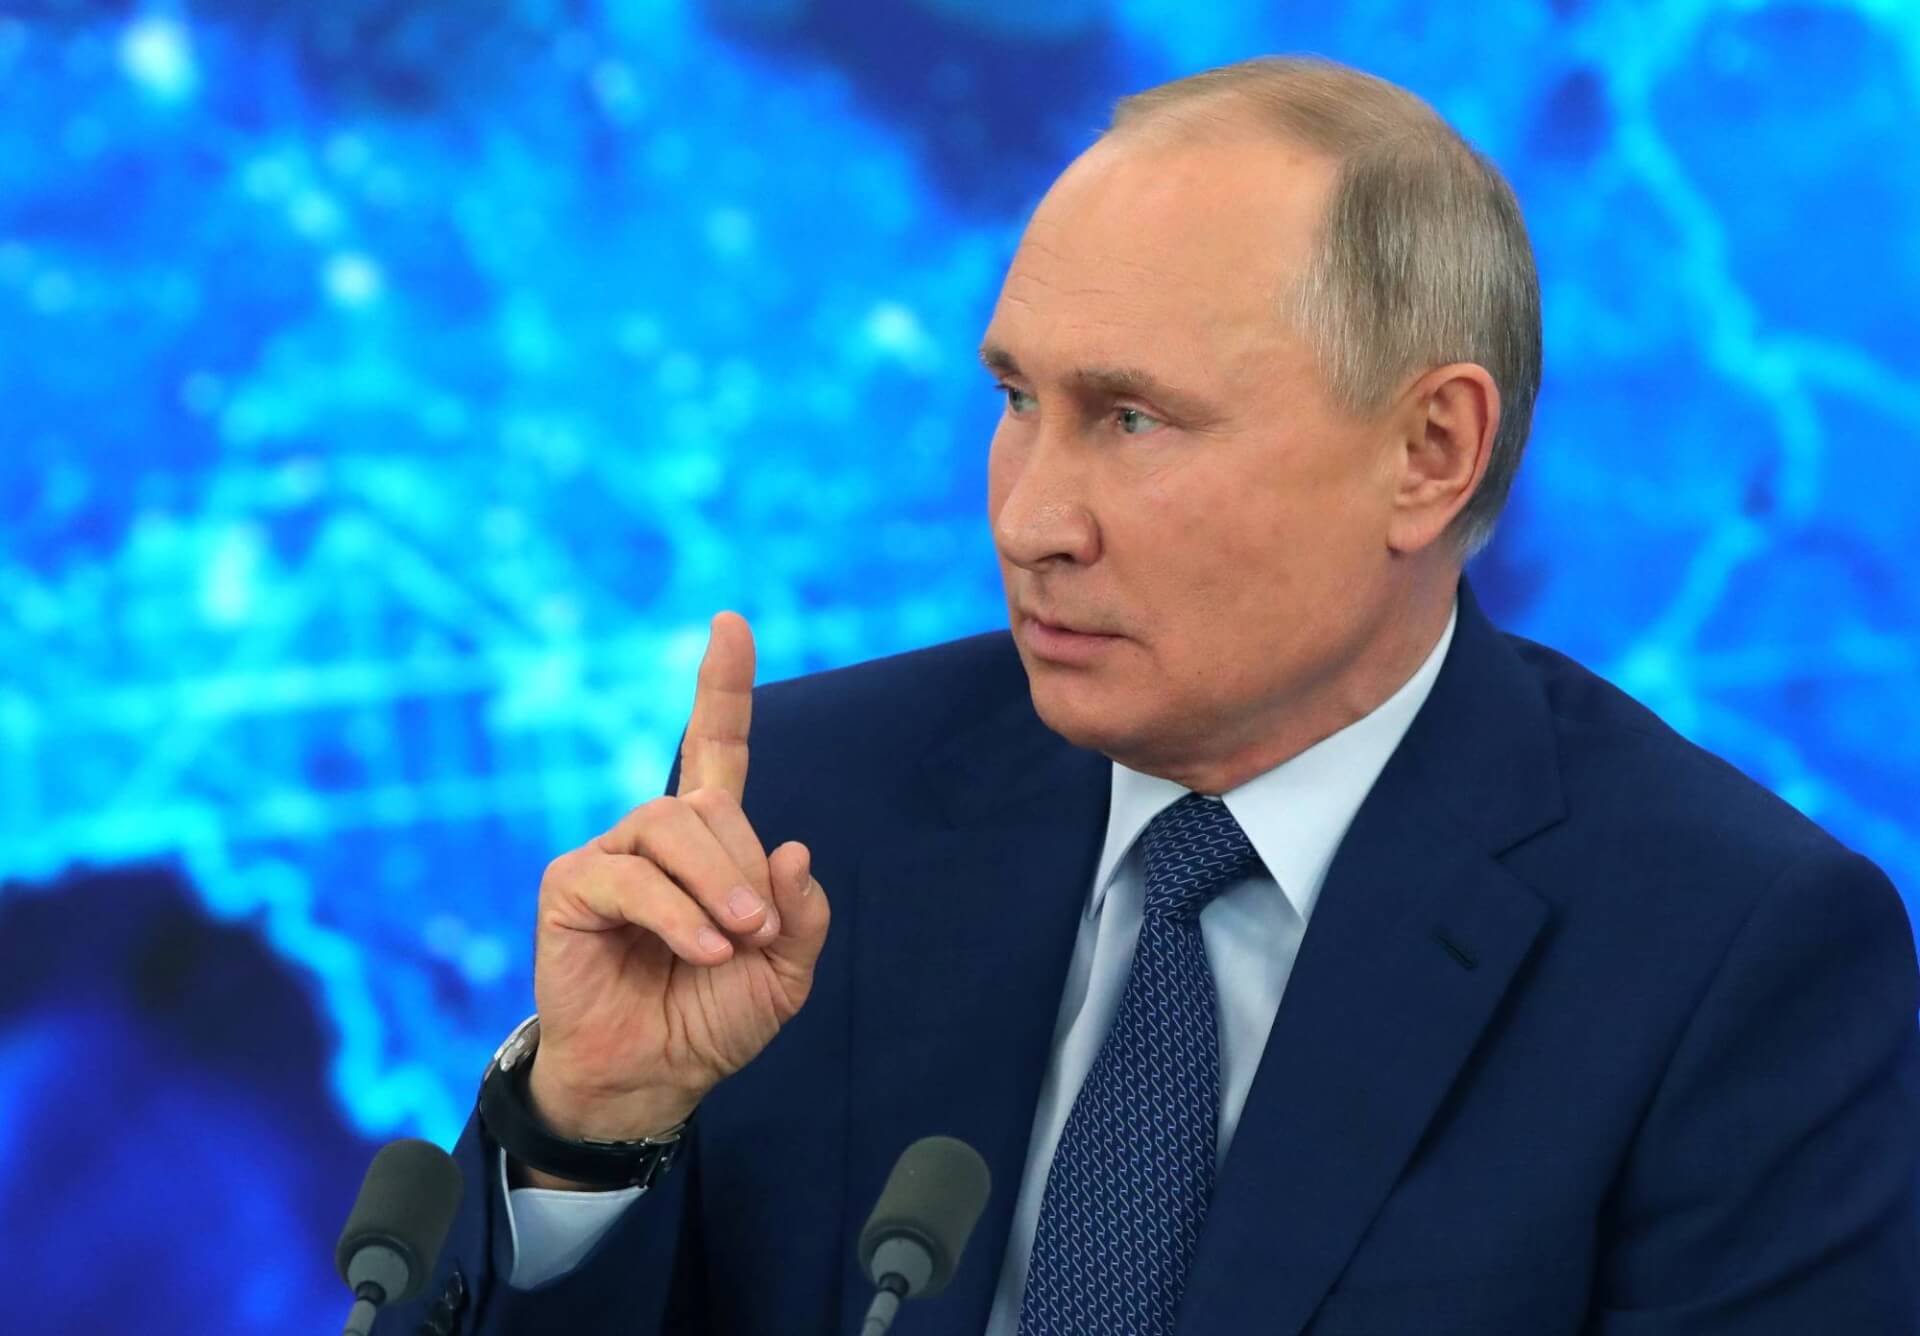 Putin Warns of Military Response if West Fails to Meet Security Demands Regarding Ukraine